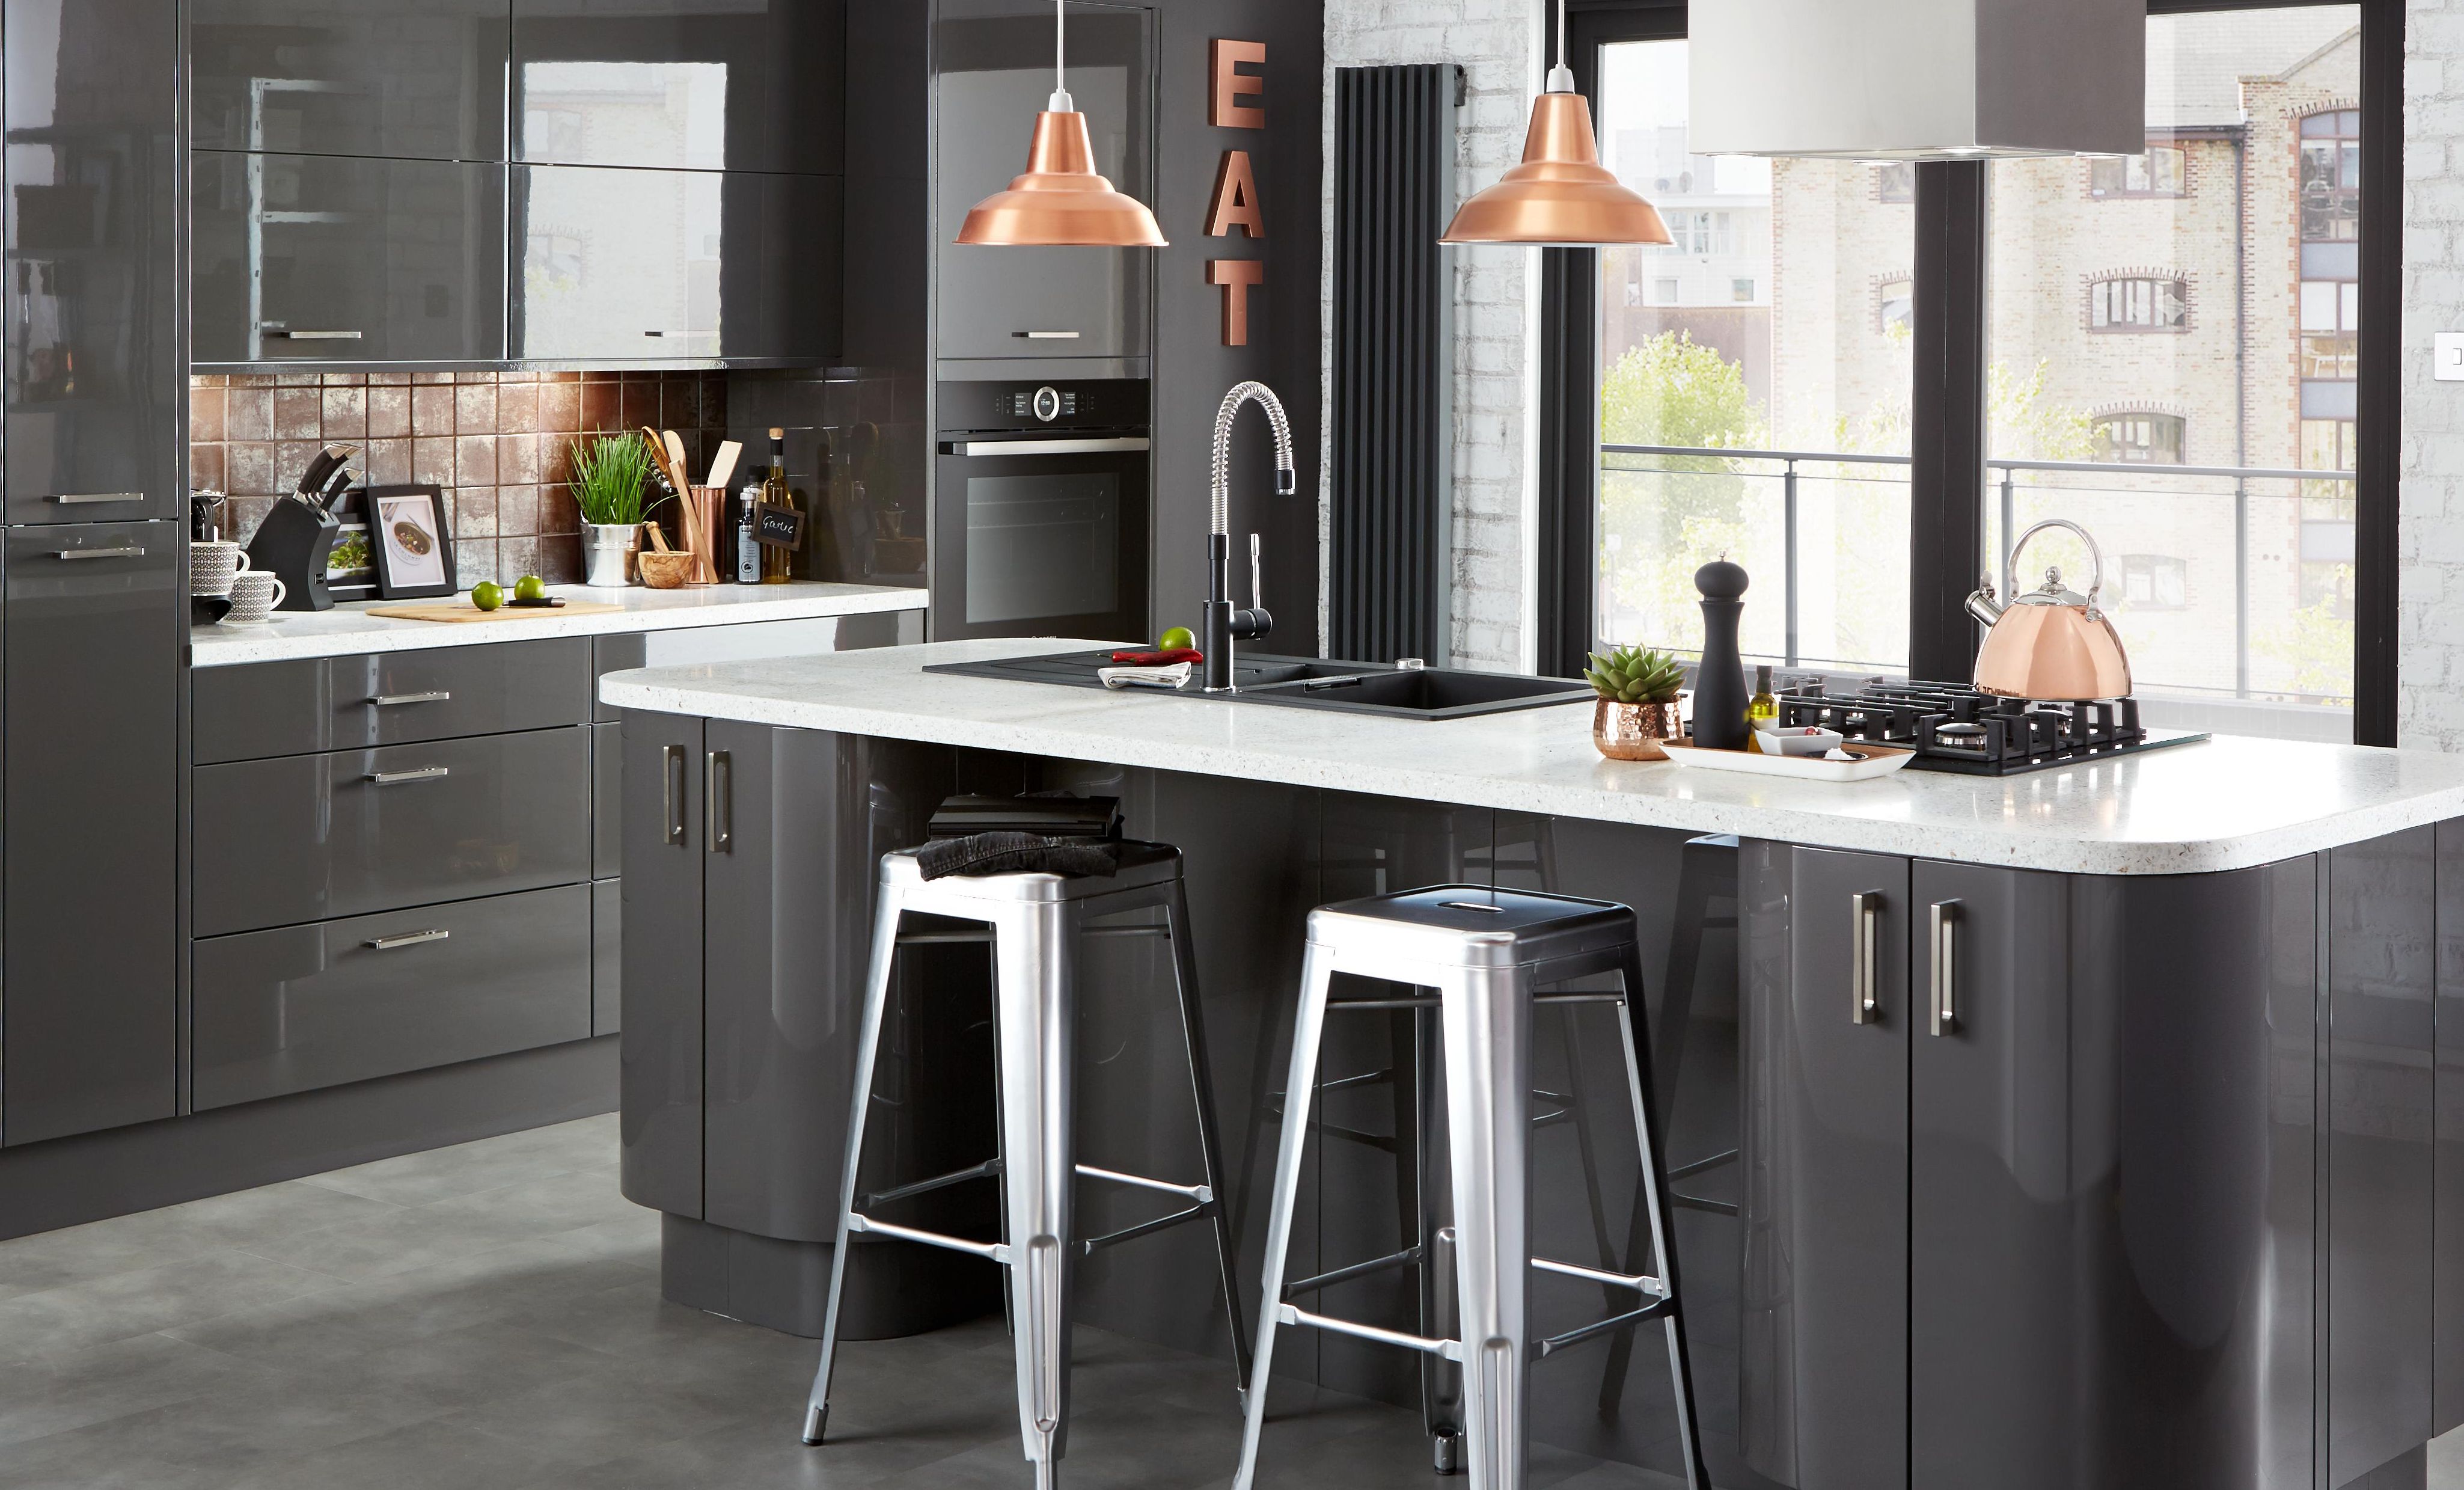 Contemporary kitchen design ideas | Ideas & Advice | DIY ...
